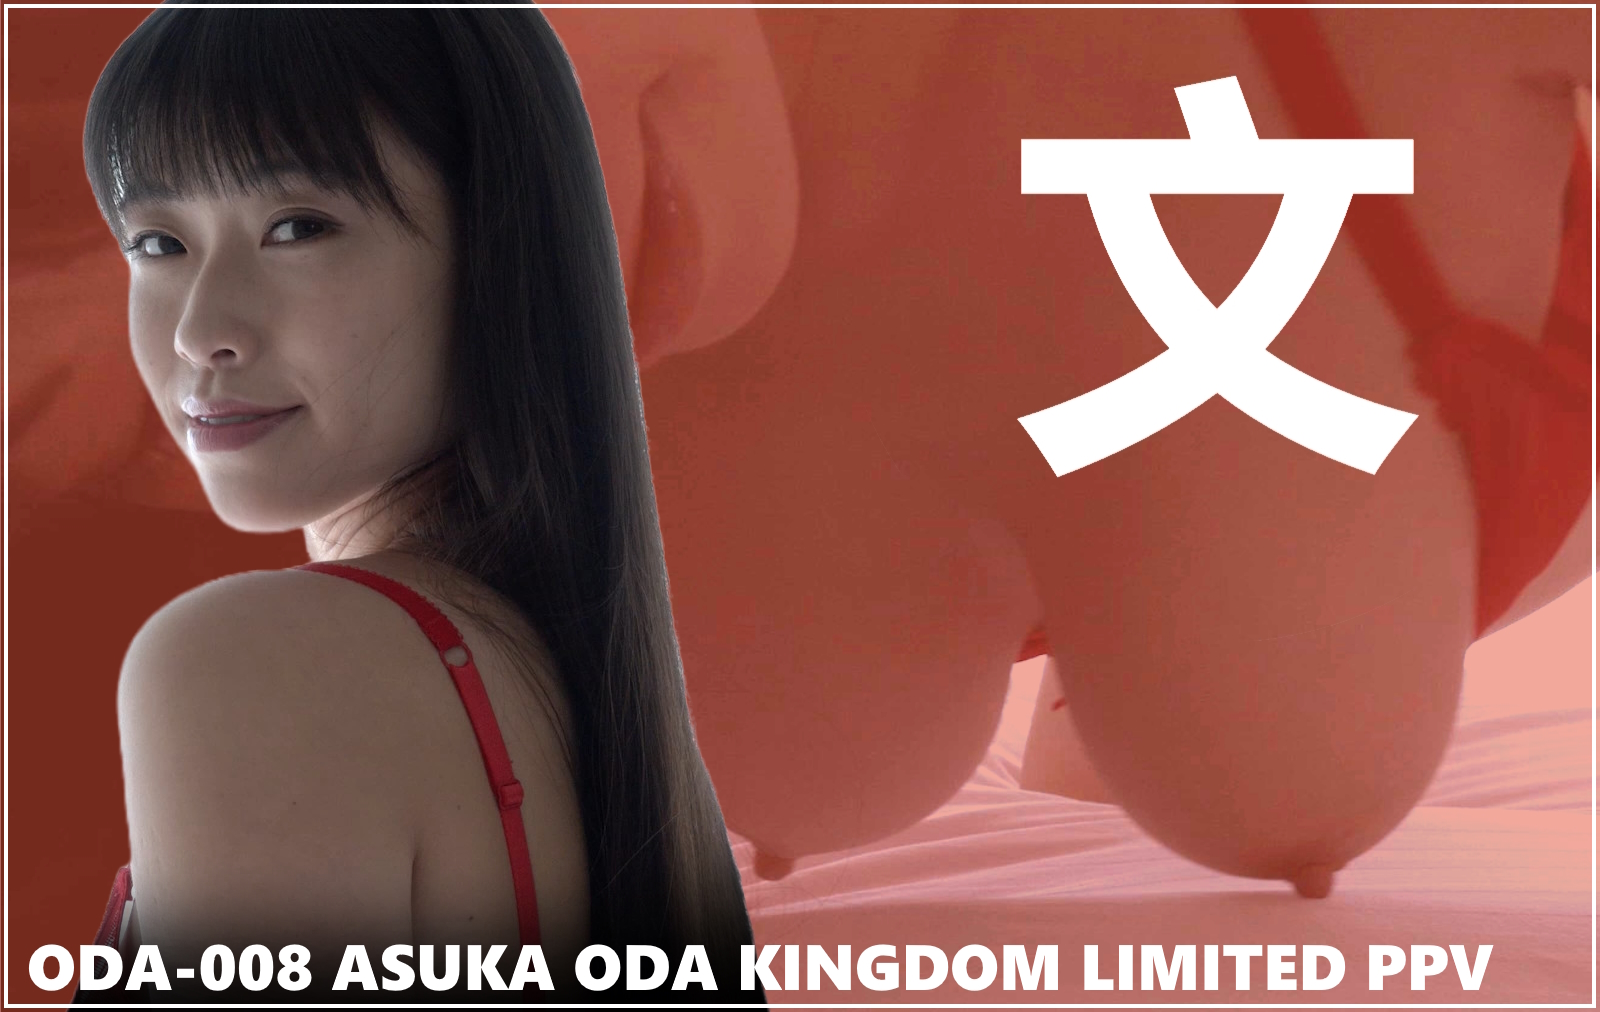 ODA-008 Oda Asuka Kingdom Limited PPV